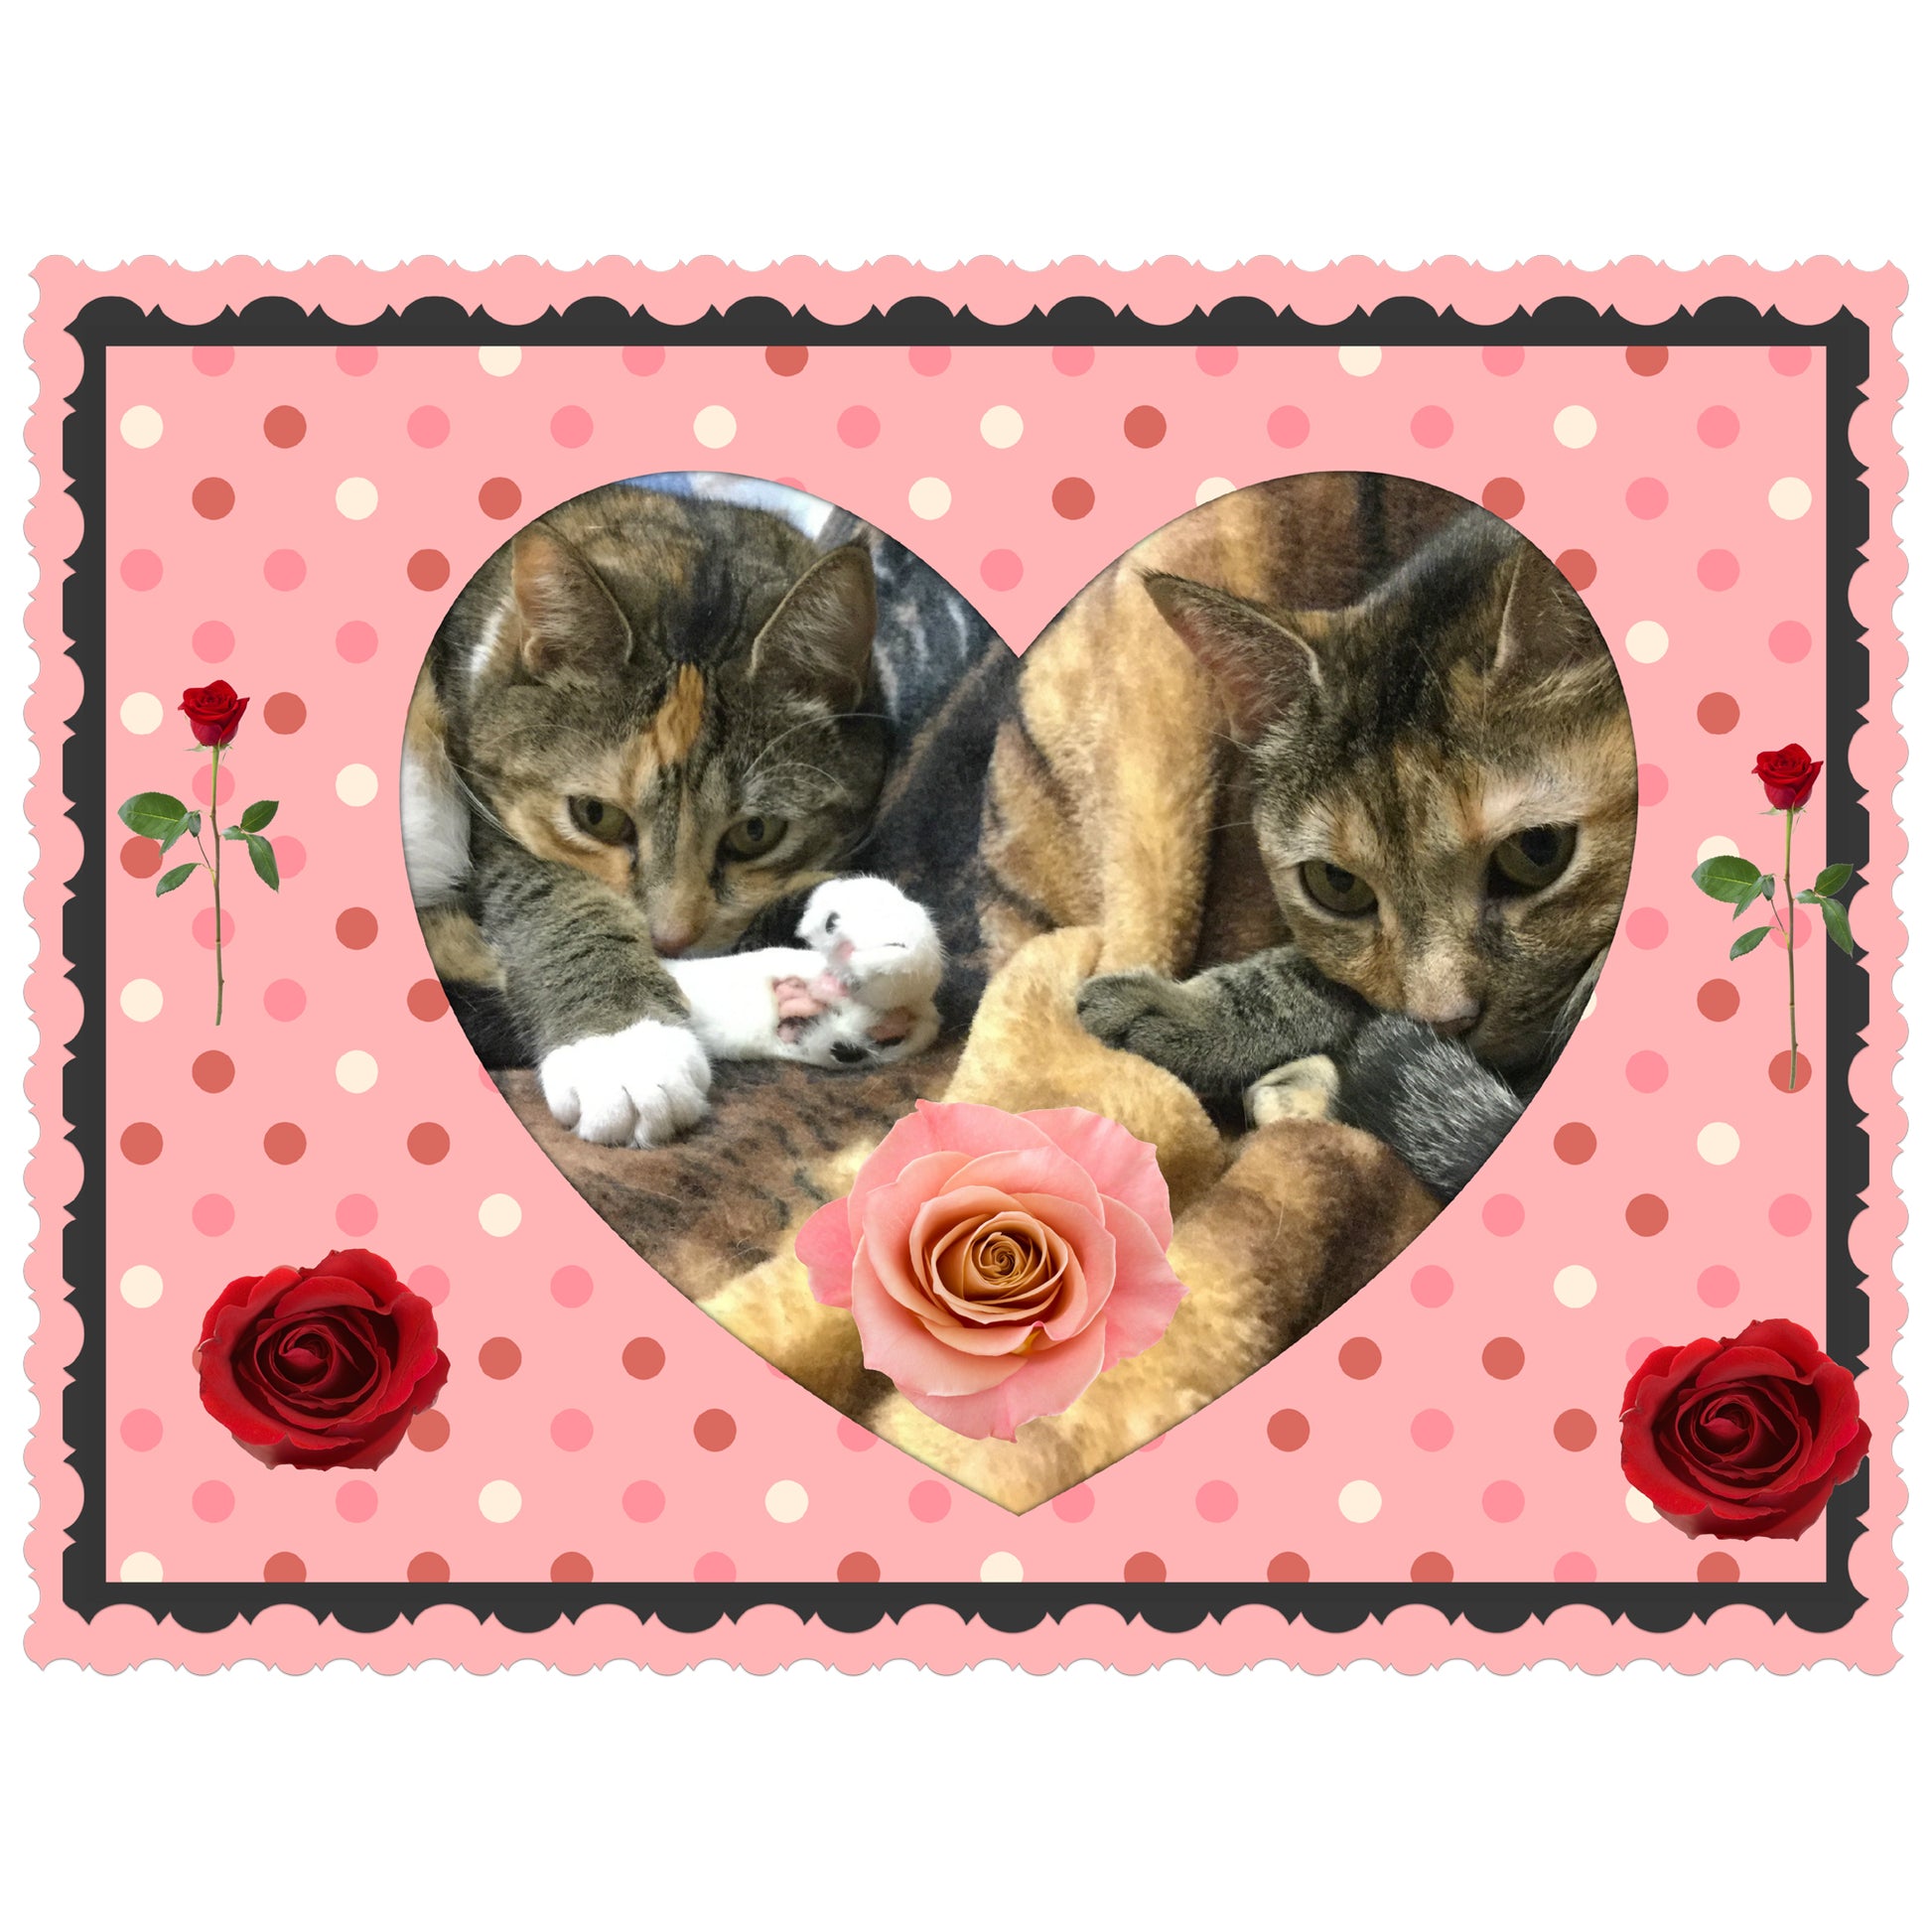 International Cat Day Digital Card - Peaches & Paprika cats